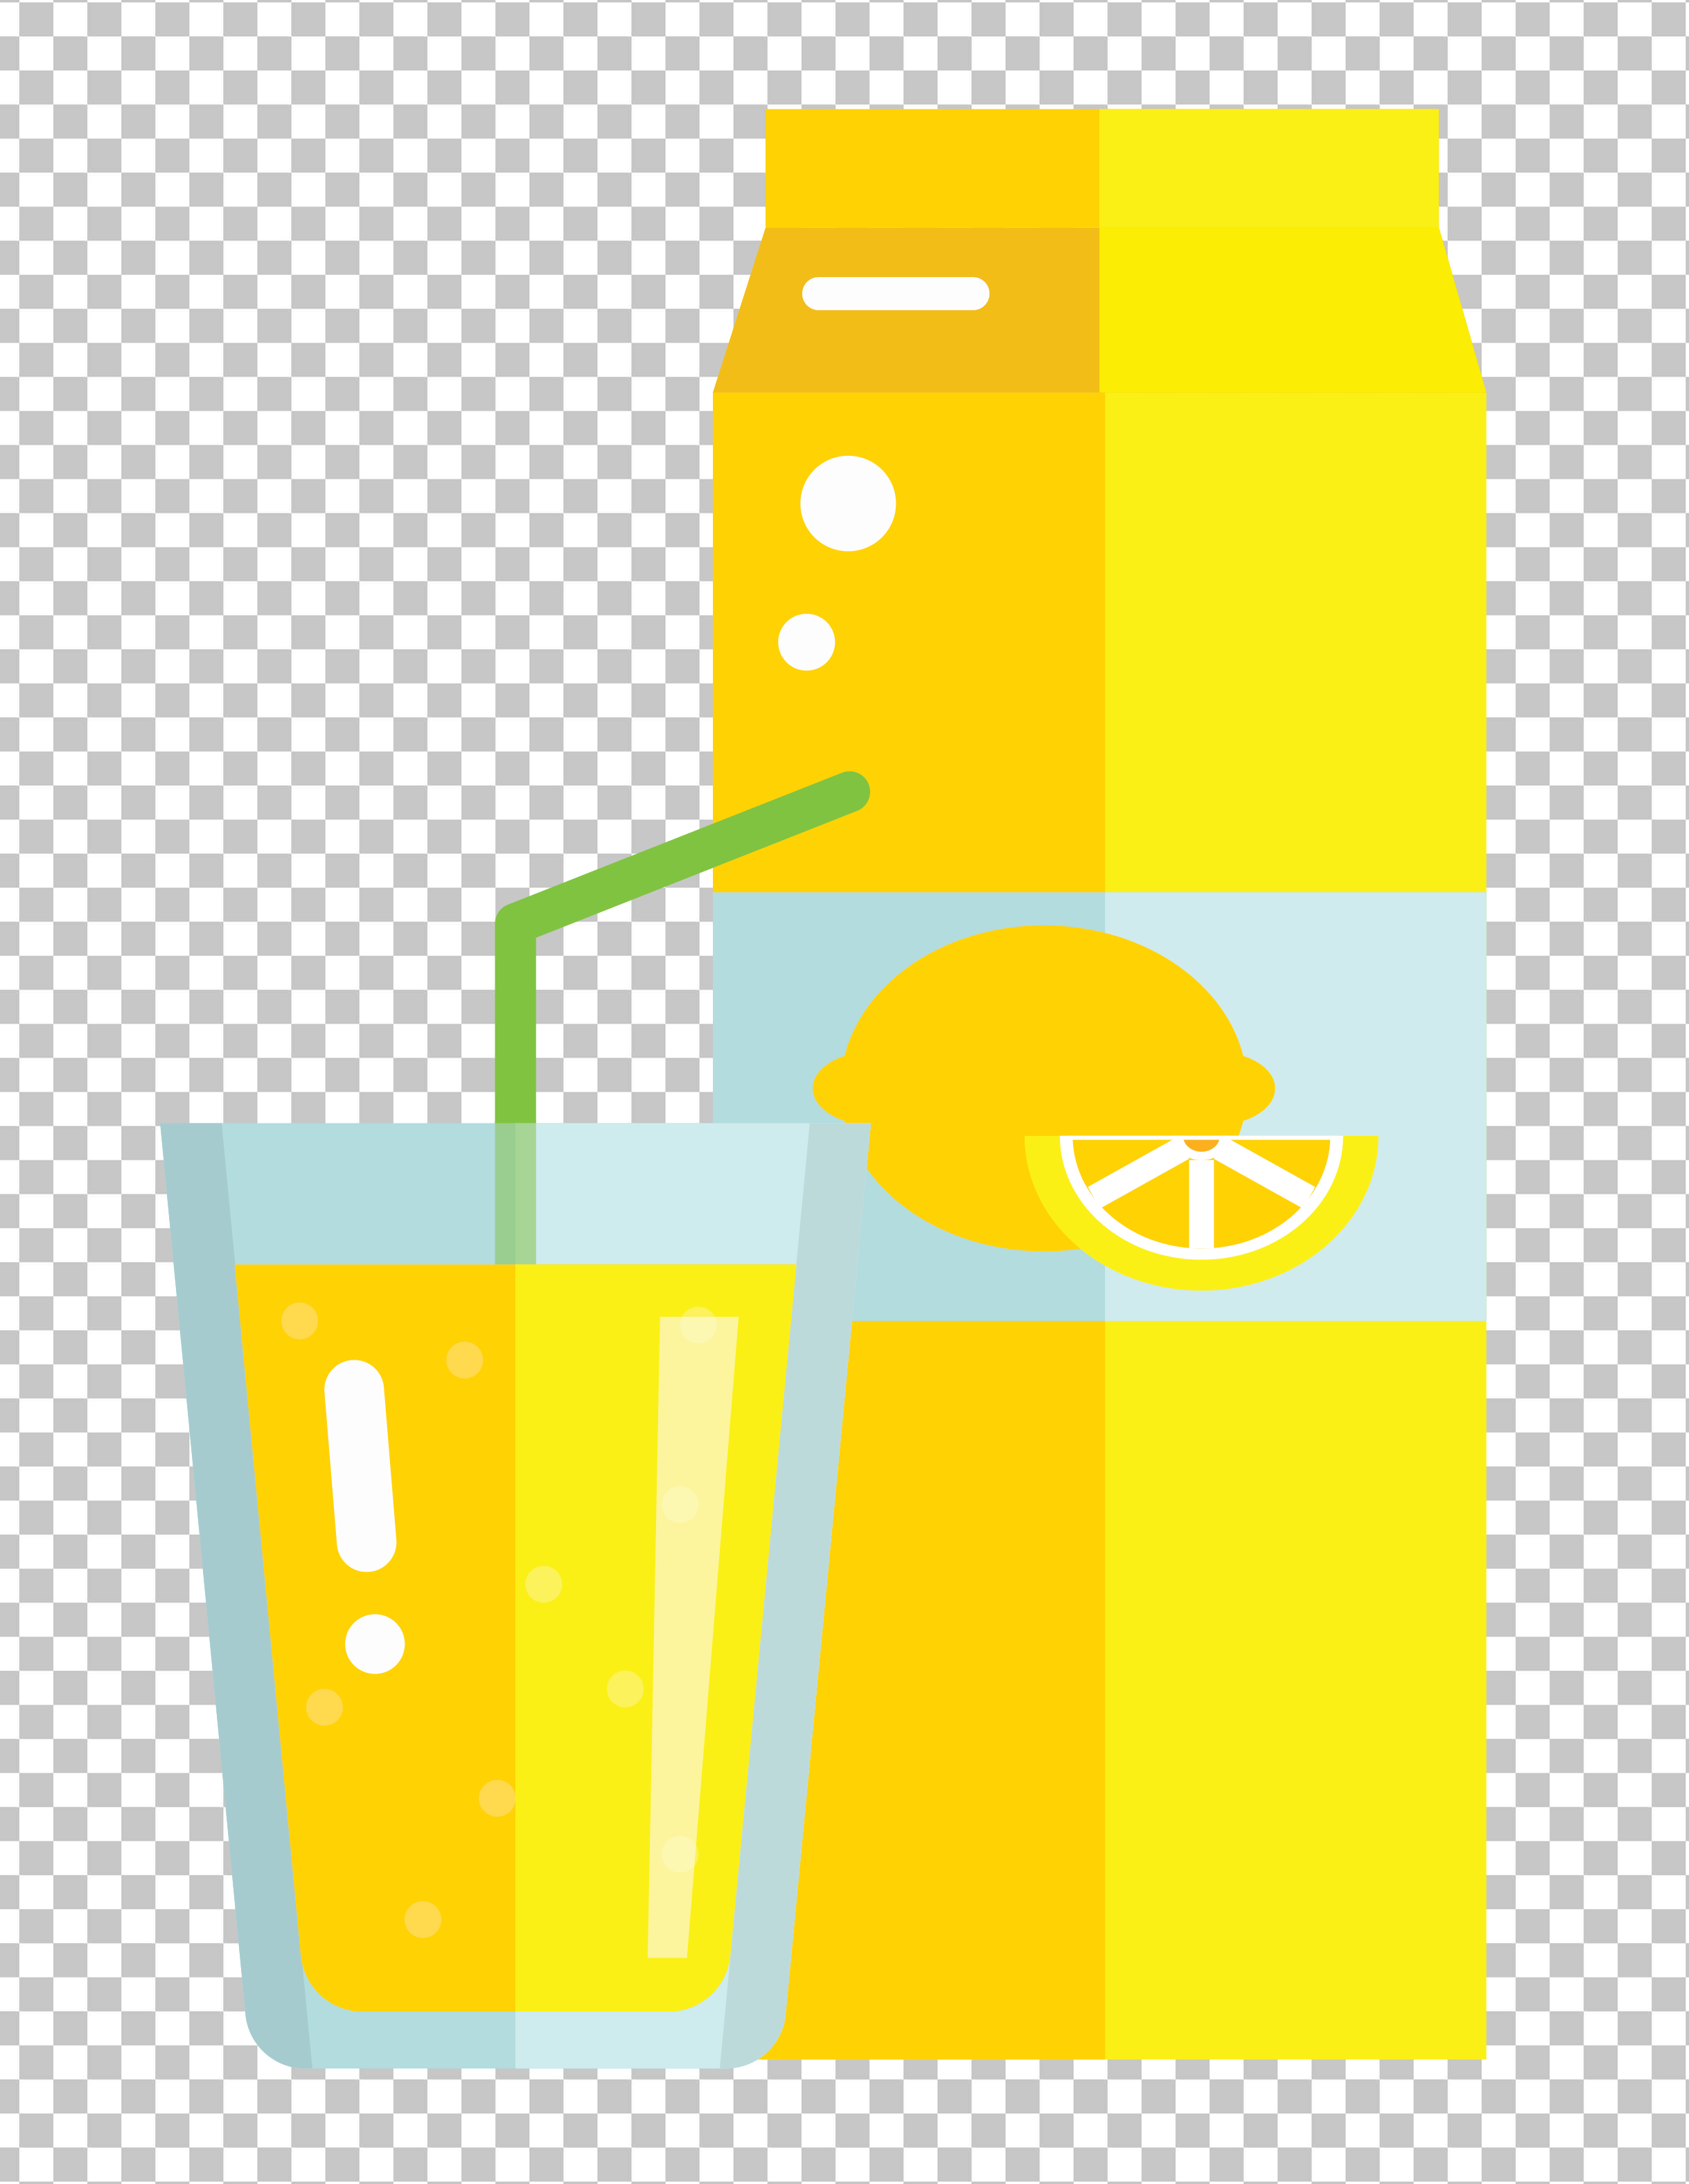 Glass of Lemon Juice Next to Box of Lemon Juice.